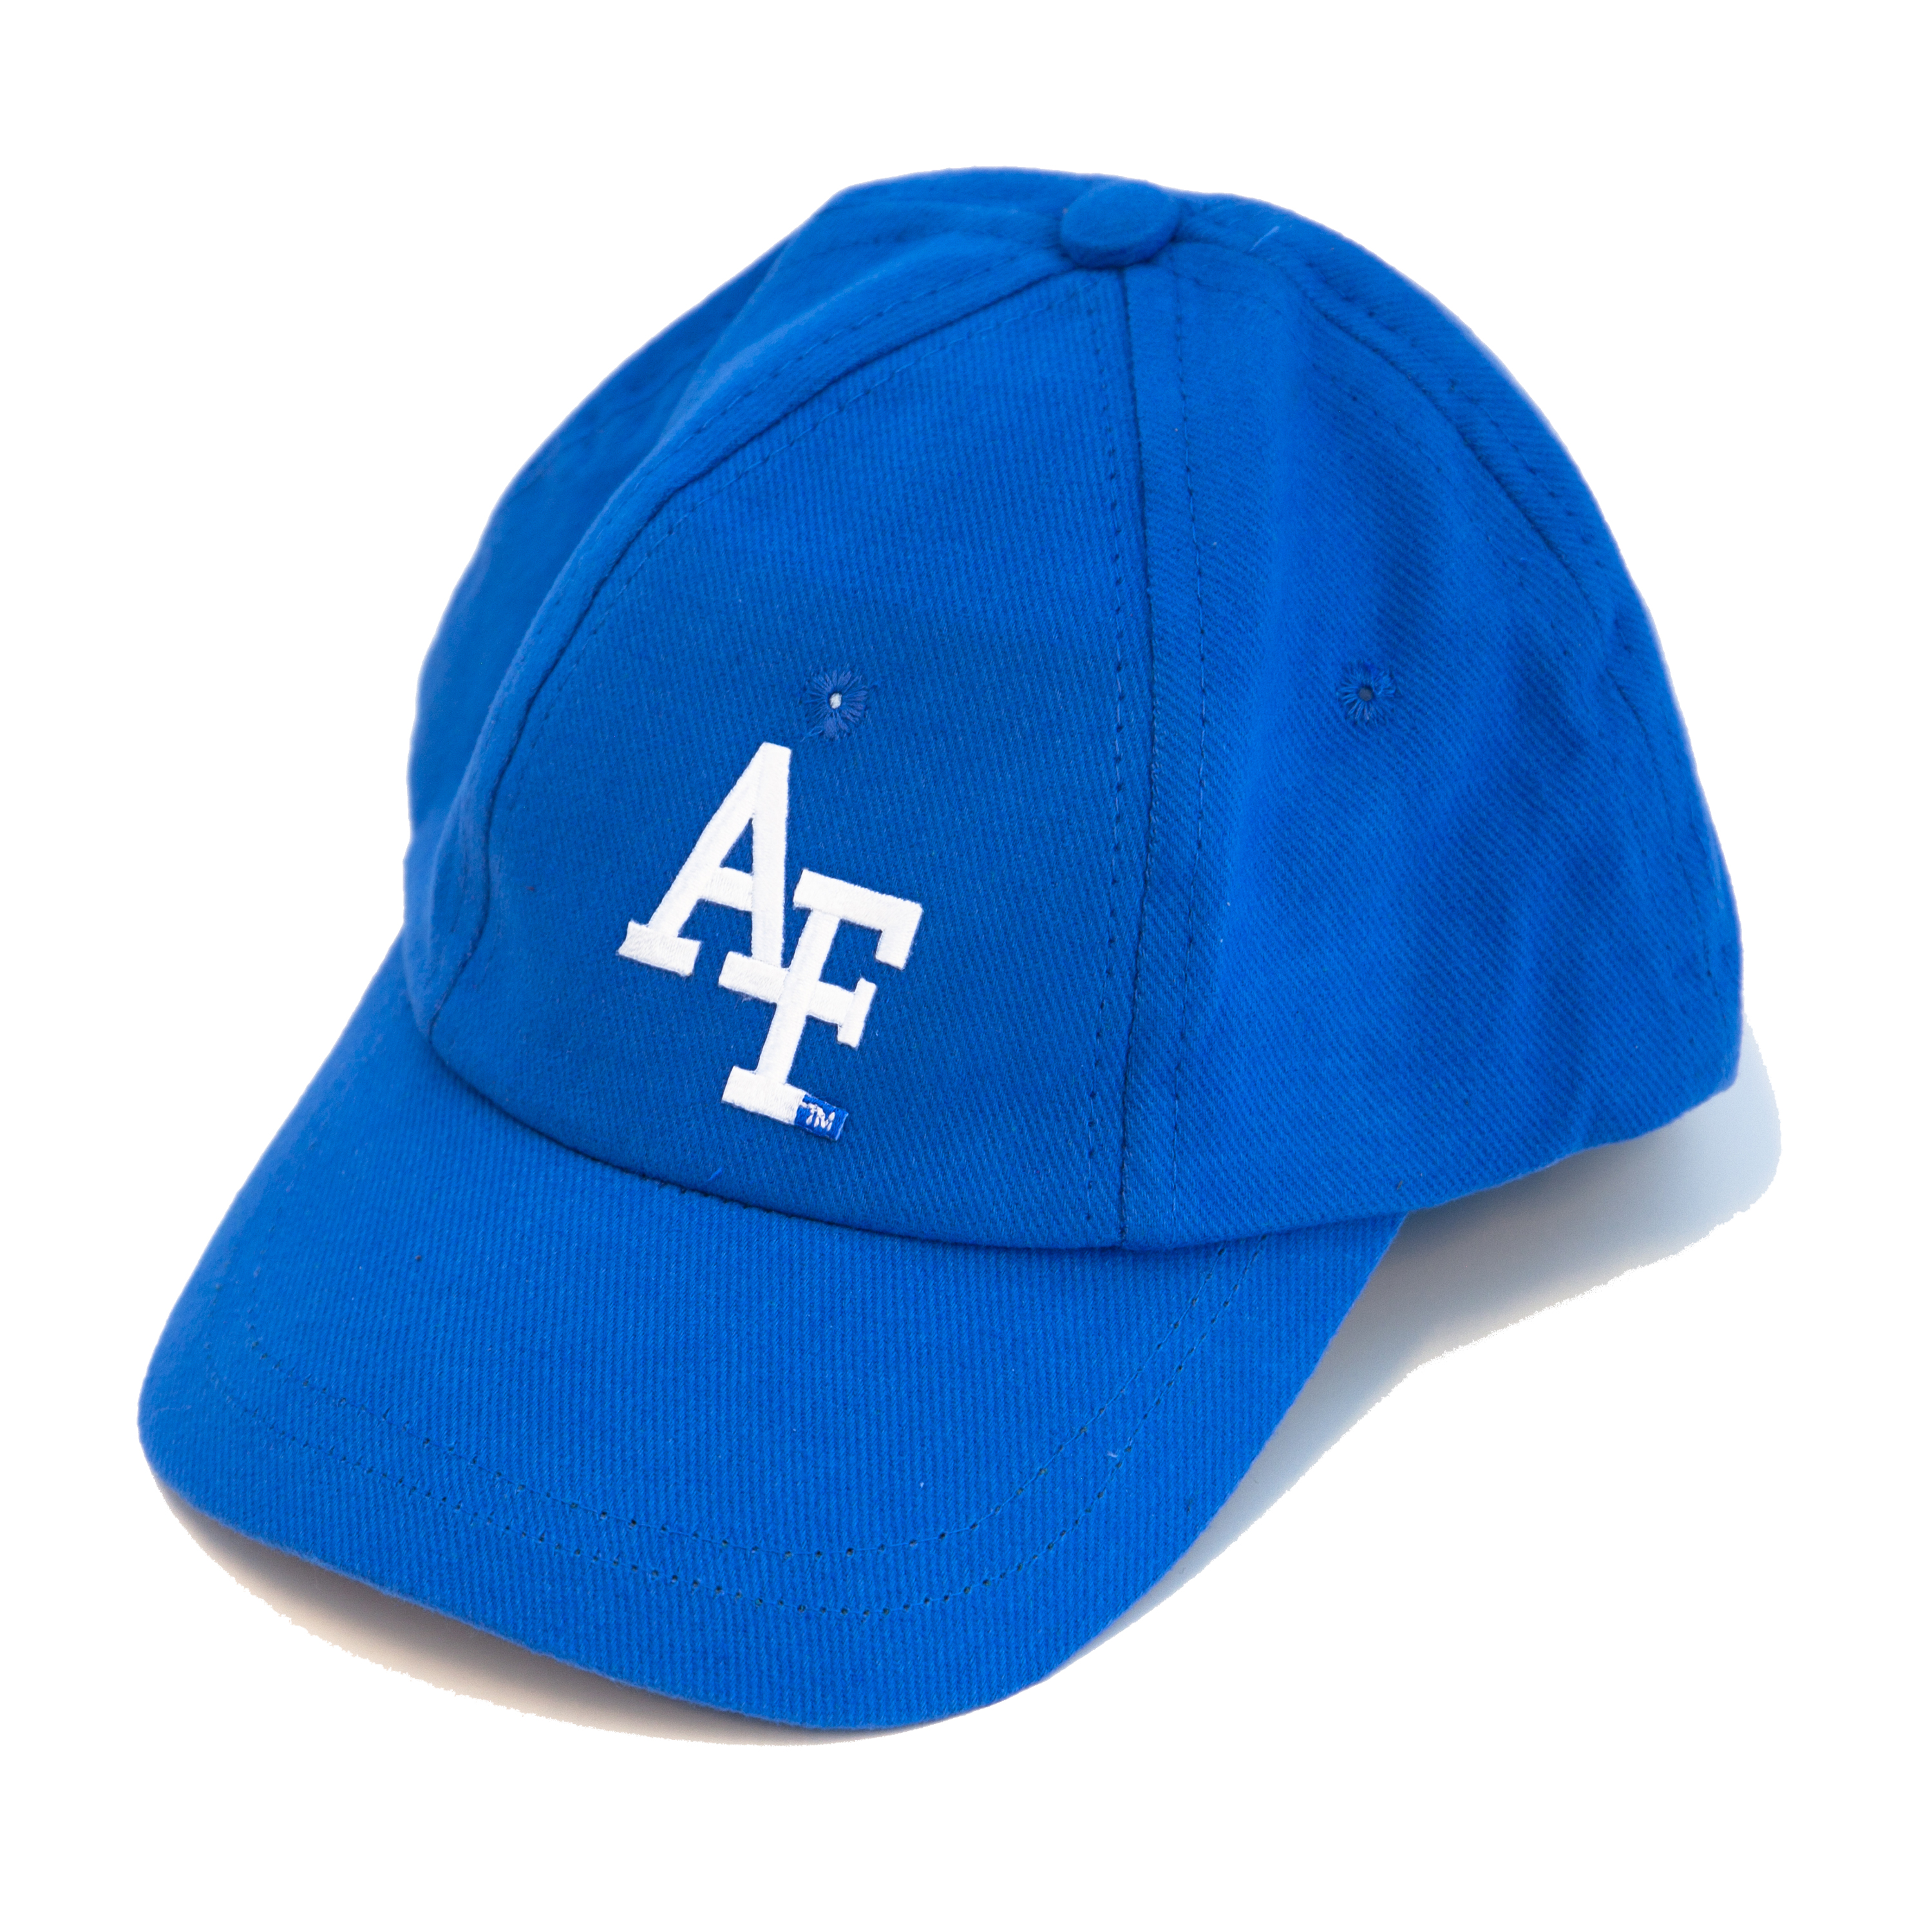 Headwear | U.S. Air Force Academy Association of Graduates Gift Shop